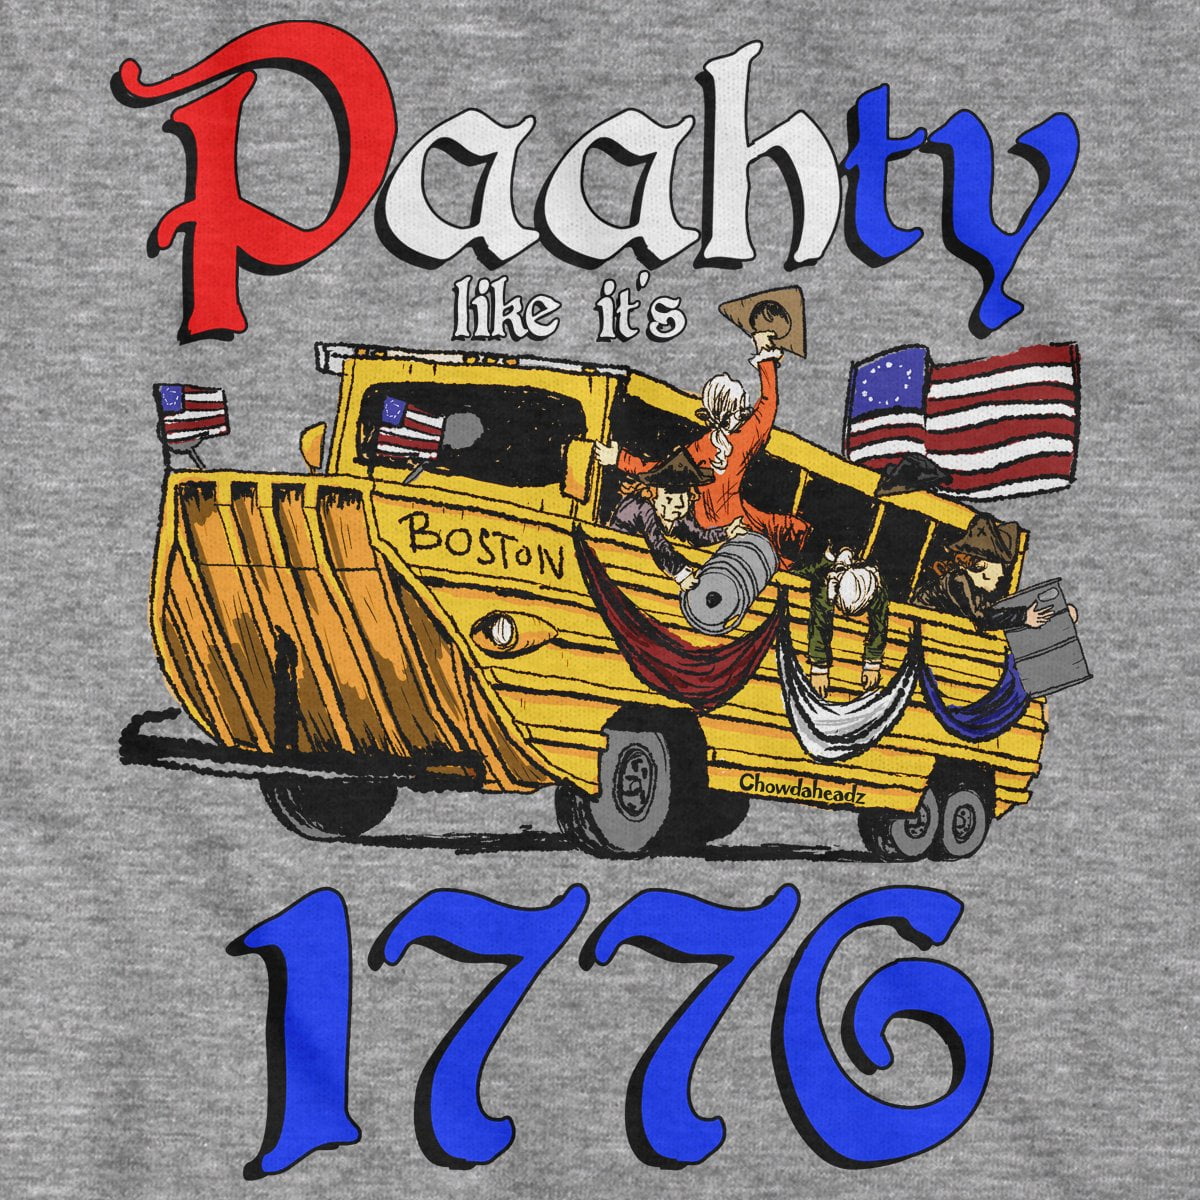 Paahty Like It's 1776 T-Shirt - Chowdaheadz